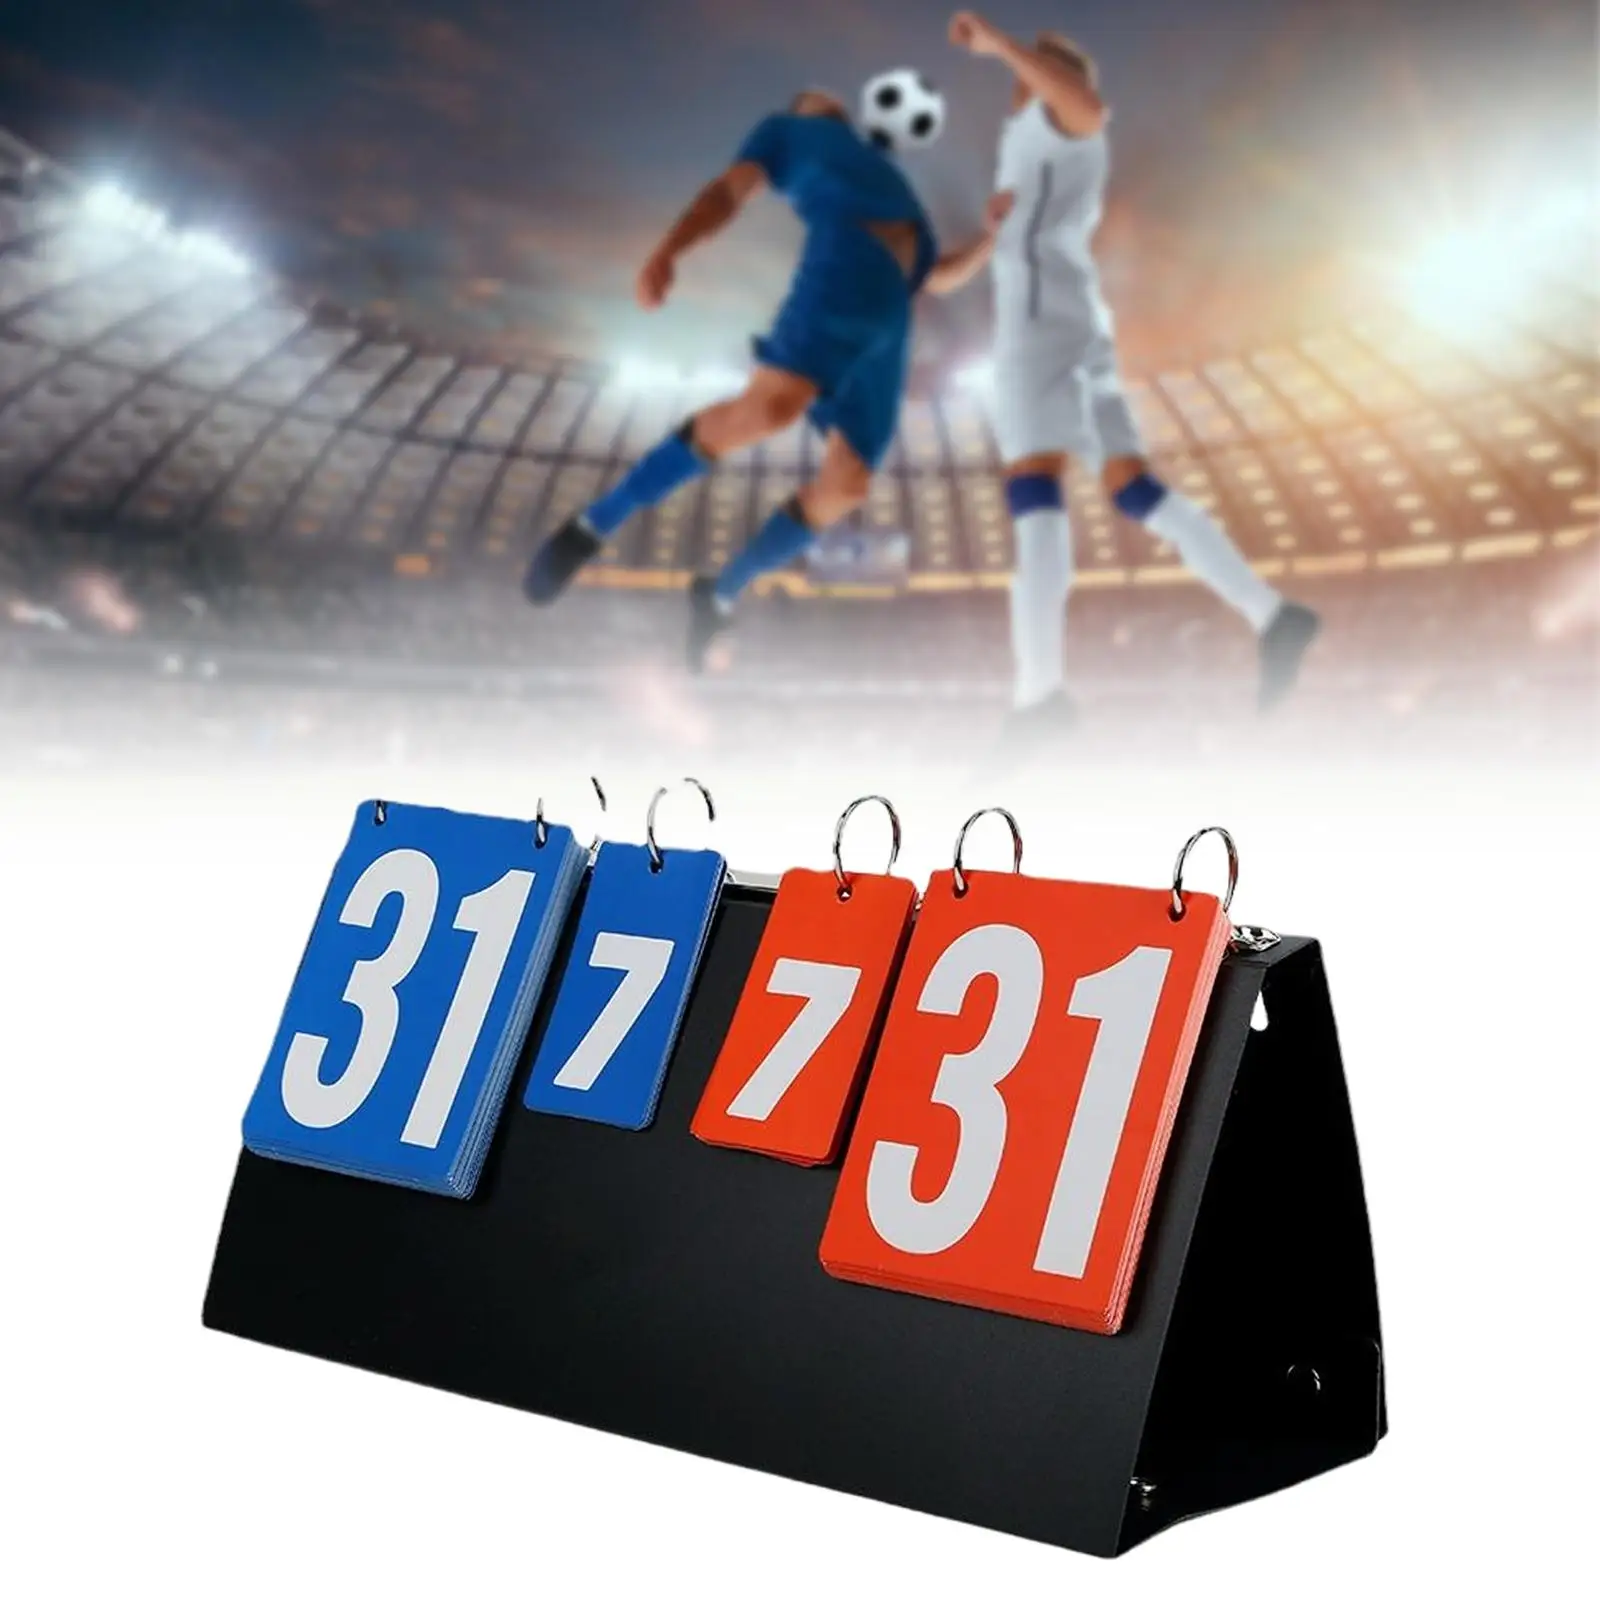 Portable Scoreboard, Score Keeper for Indoor & Outdoor Sports,